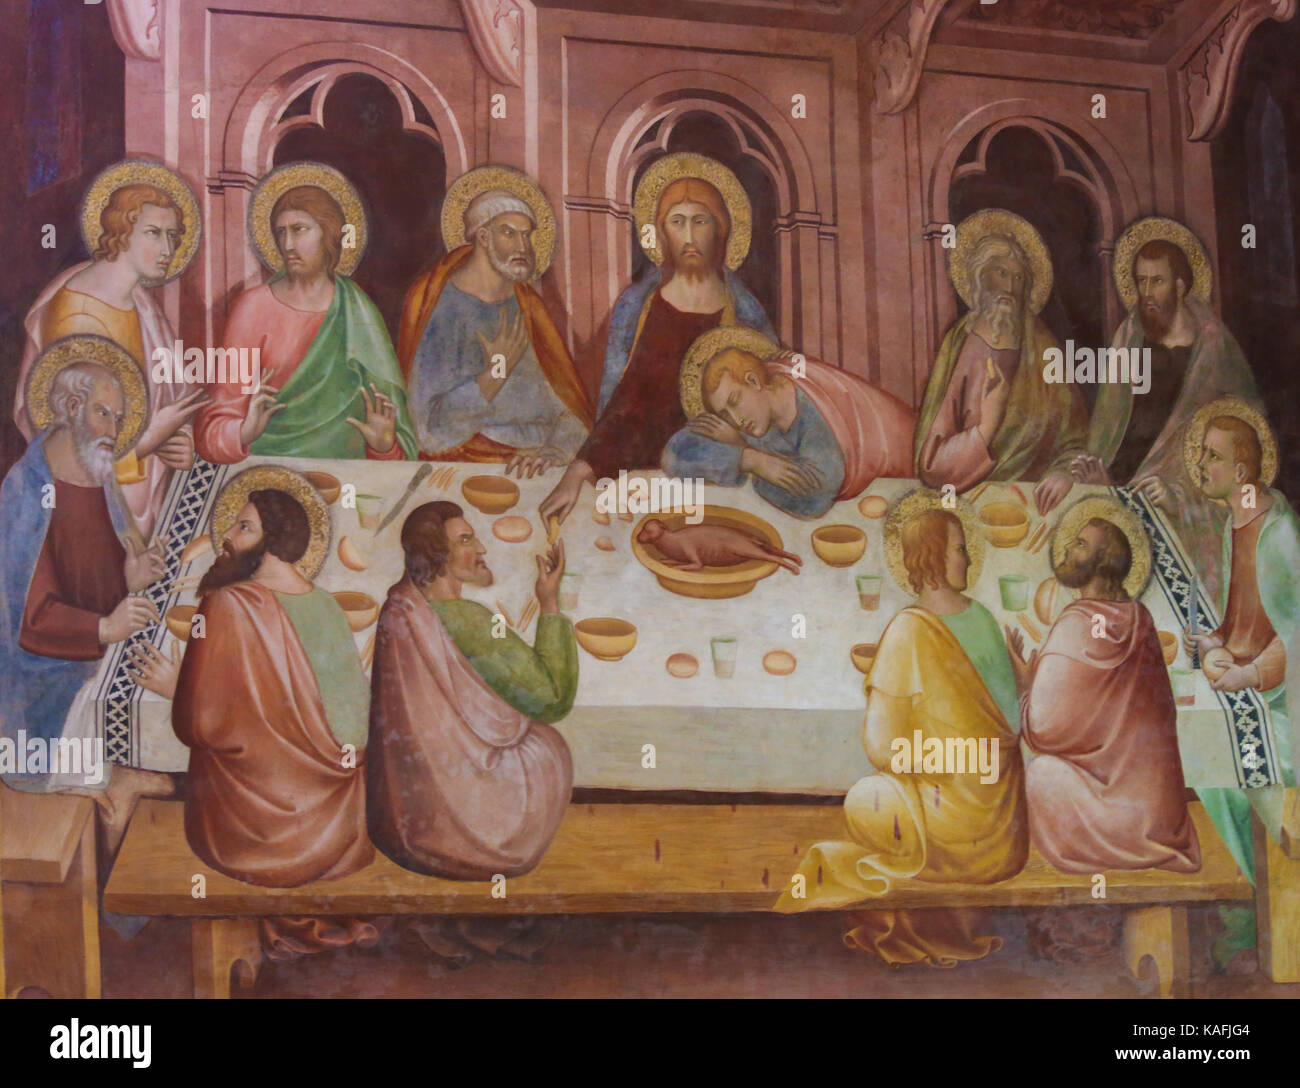 File:The-Last-Supper-Restored-Da-Vinci 32x16.jpg - Wikimedia Commons